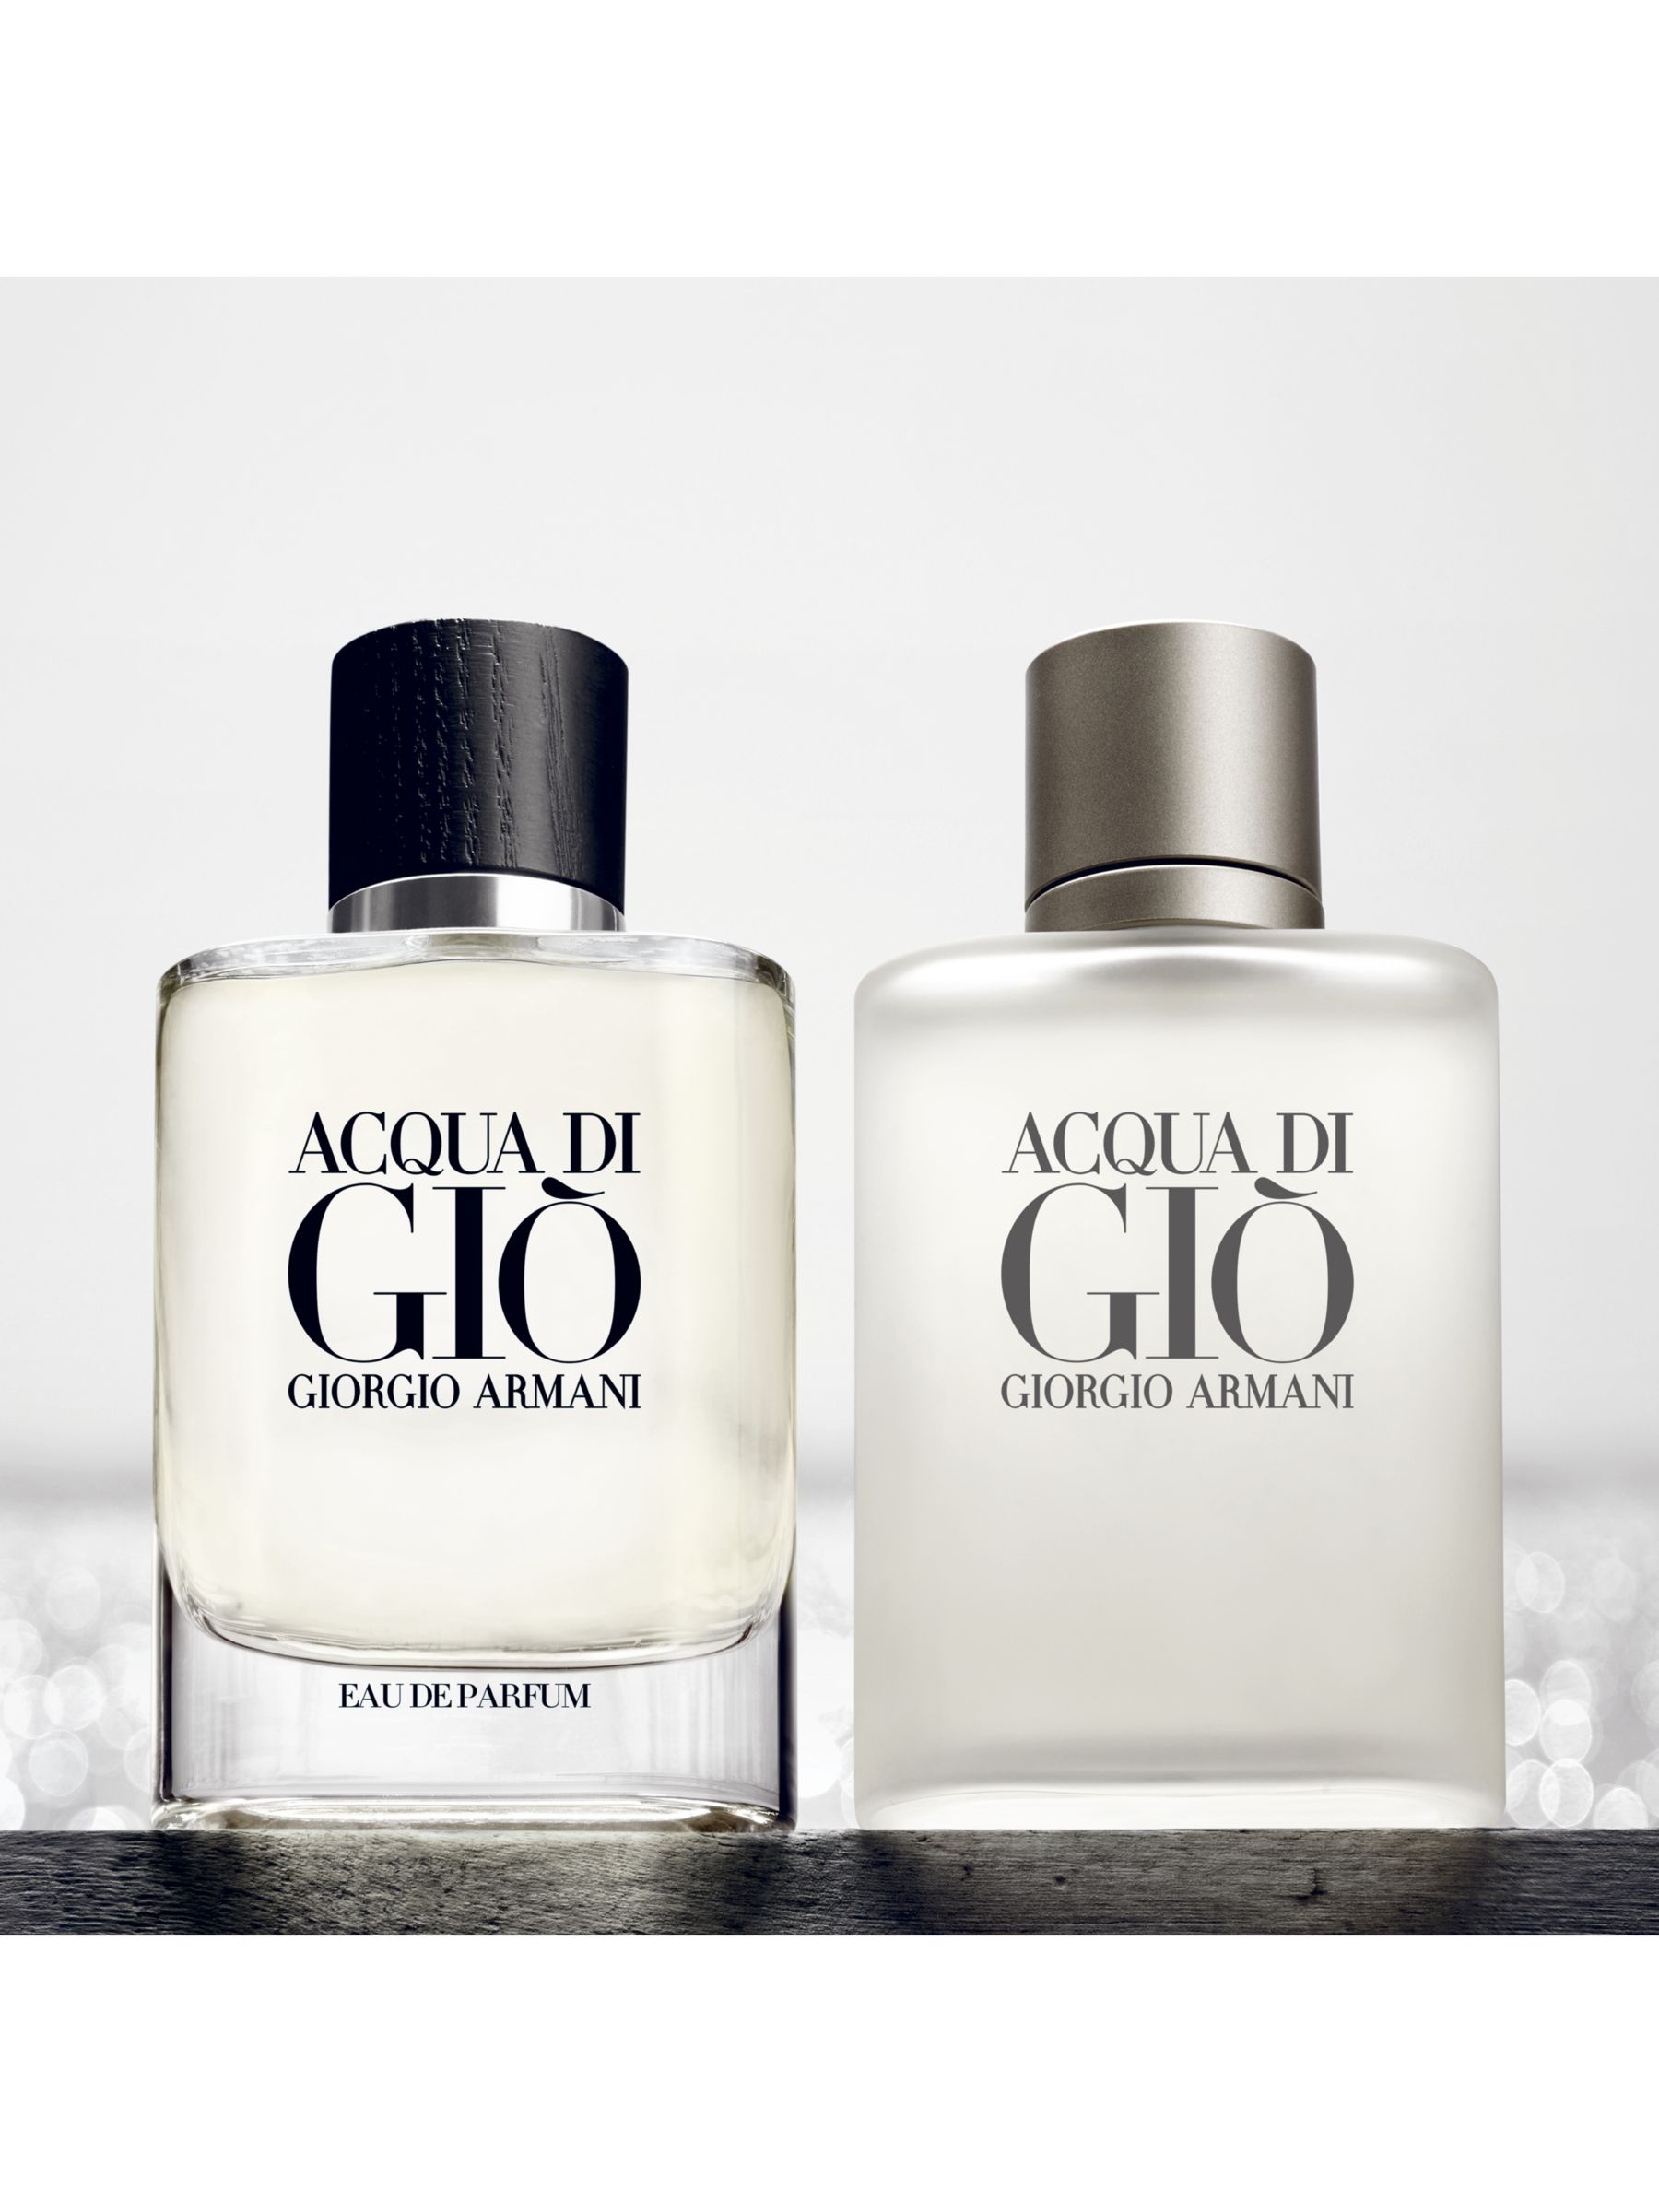 Giorgio Armani Acqua Di Giò Eau de Parfum, 125ml at John Lewis & Partners